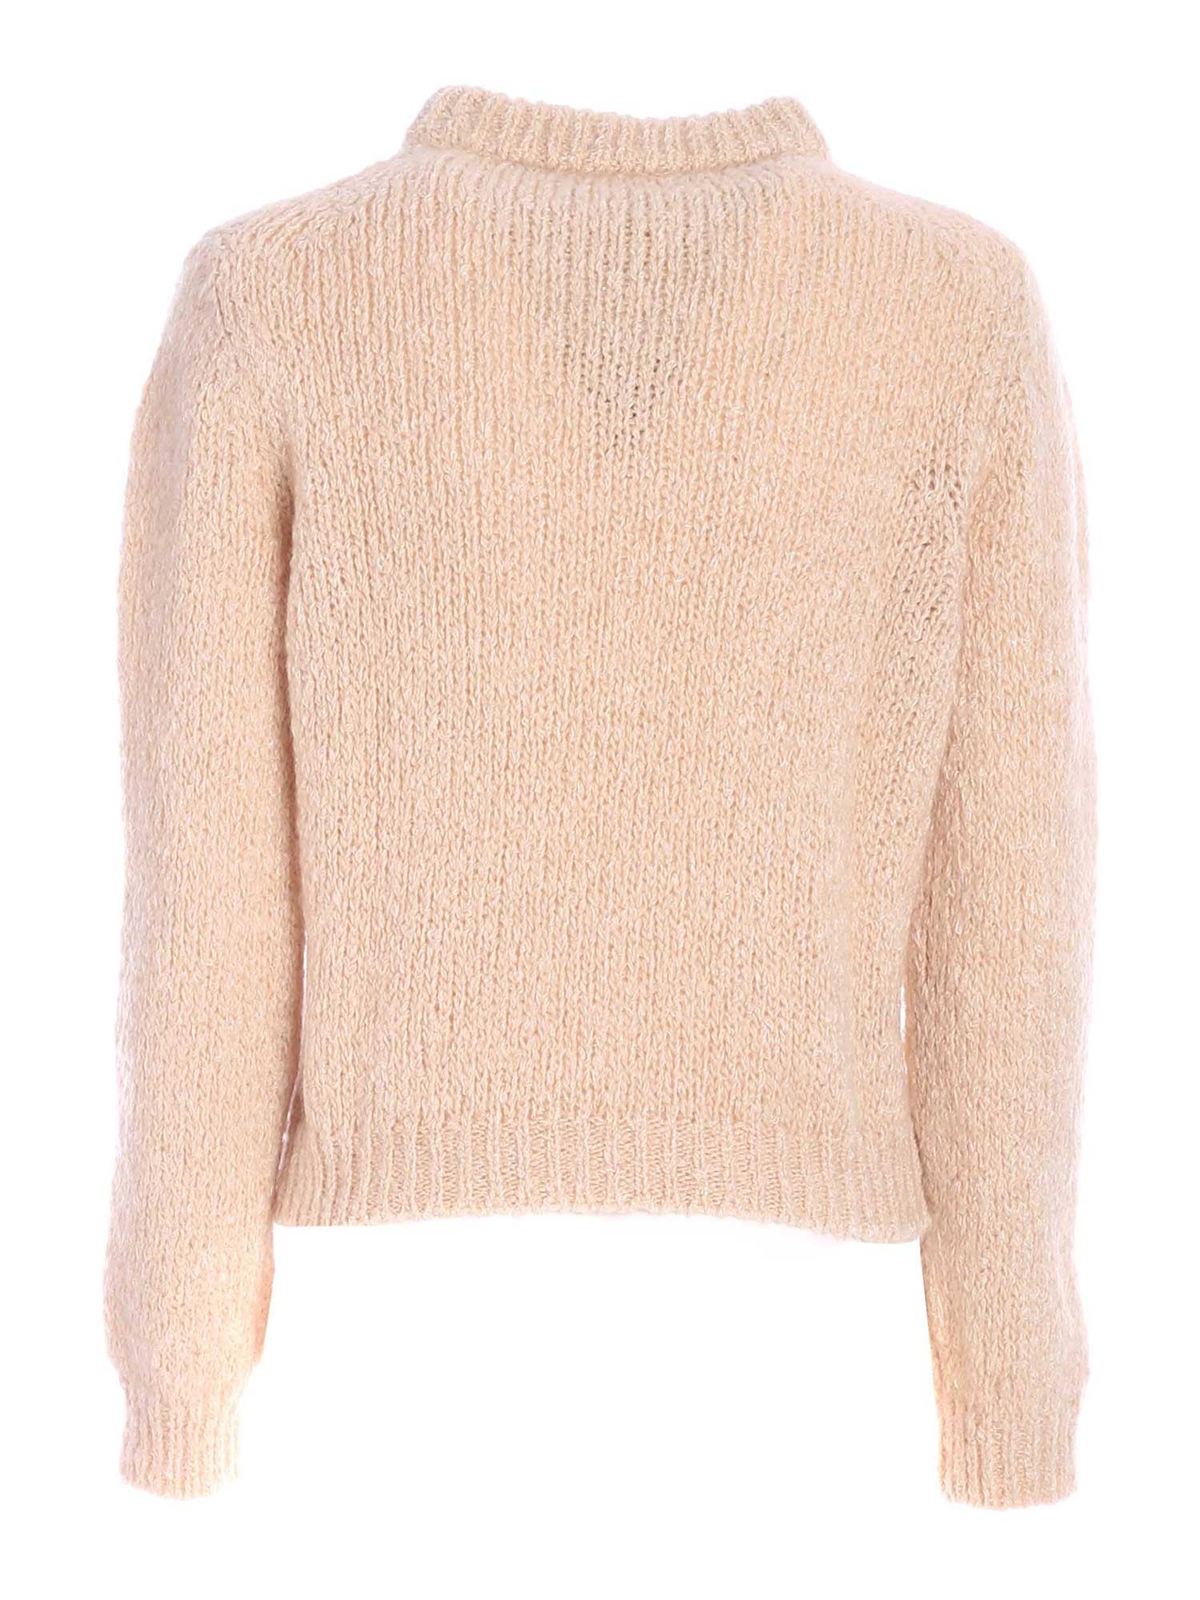 Turtlenecks & Polo necks Les Copains - Sweater in cream color - 0L12816227